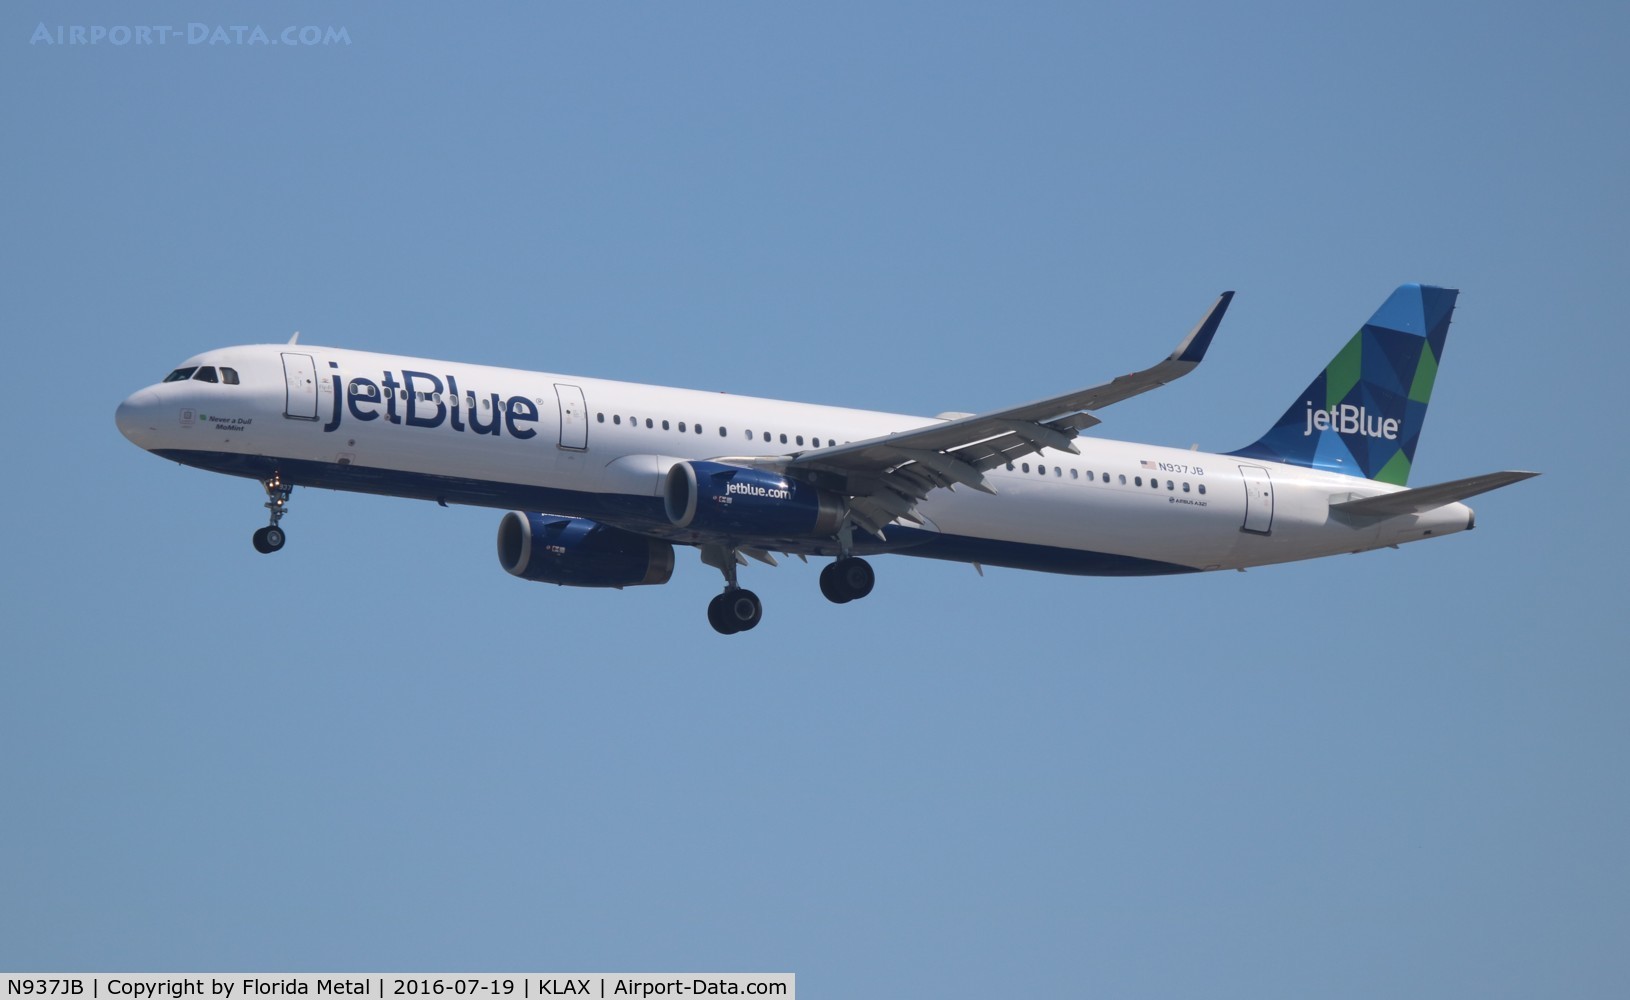 N937JB, 2014 Airbus A321-231 C/N 6245, LAX spotting